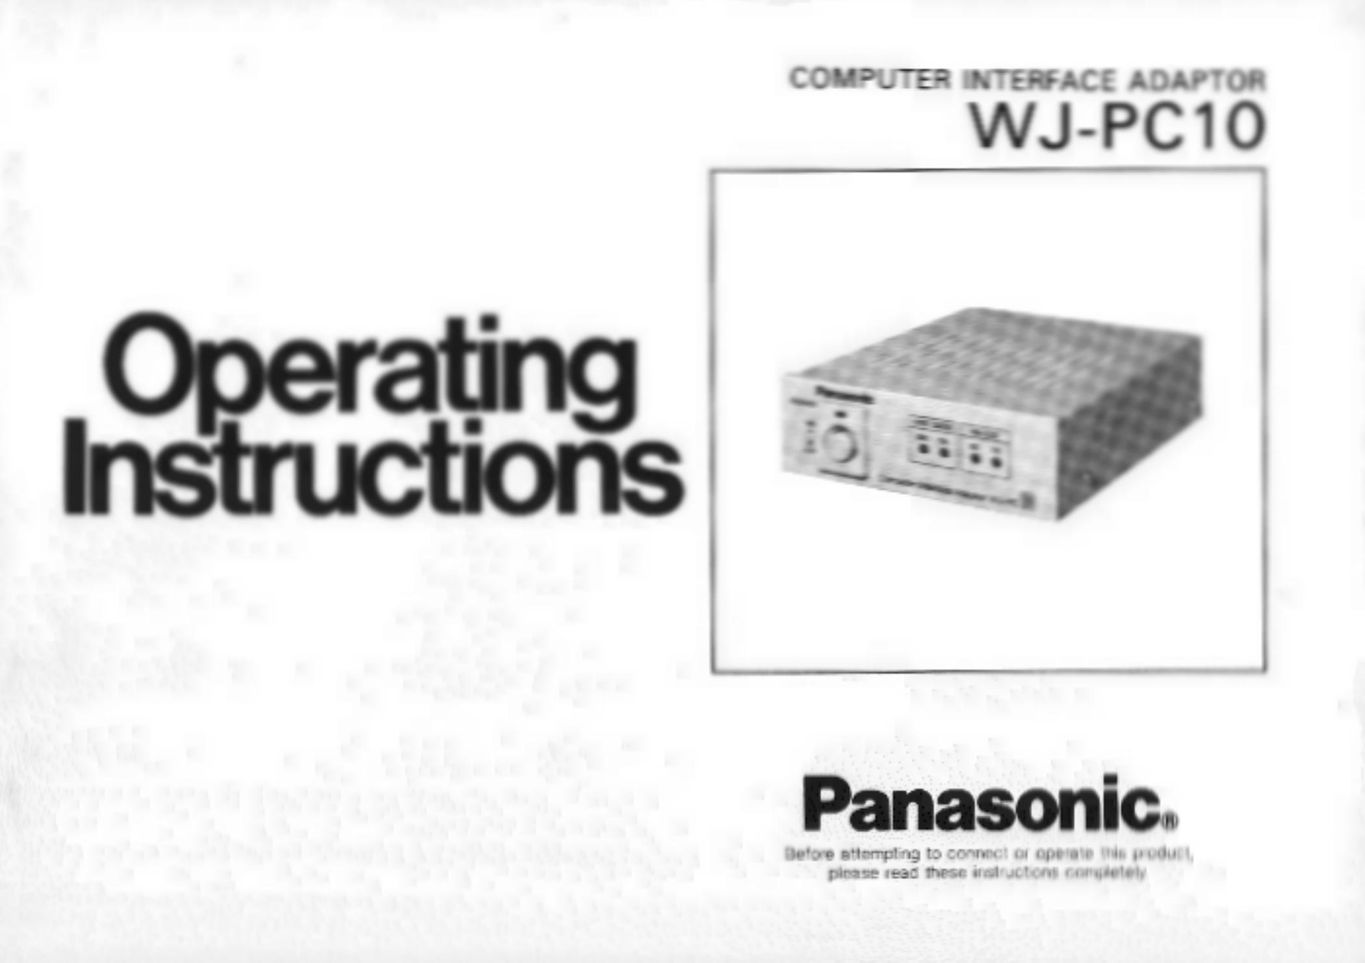 Panasonic WJ-PC10 Computer Accessories User Manual